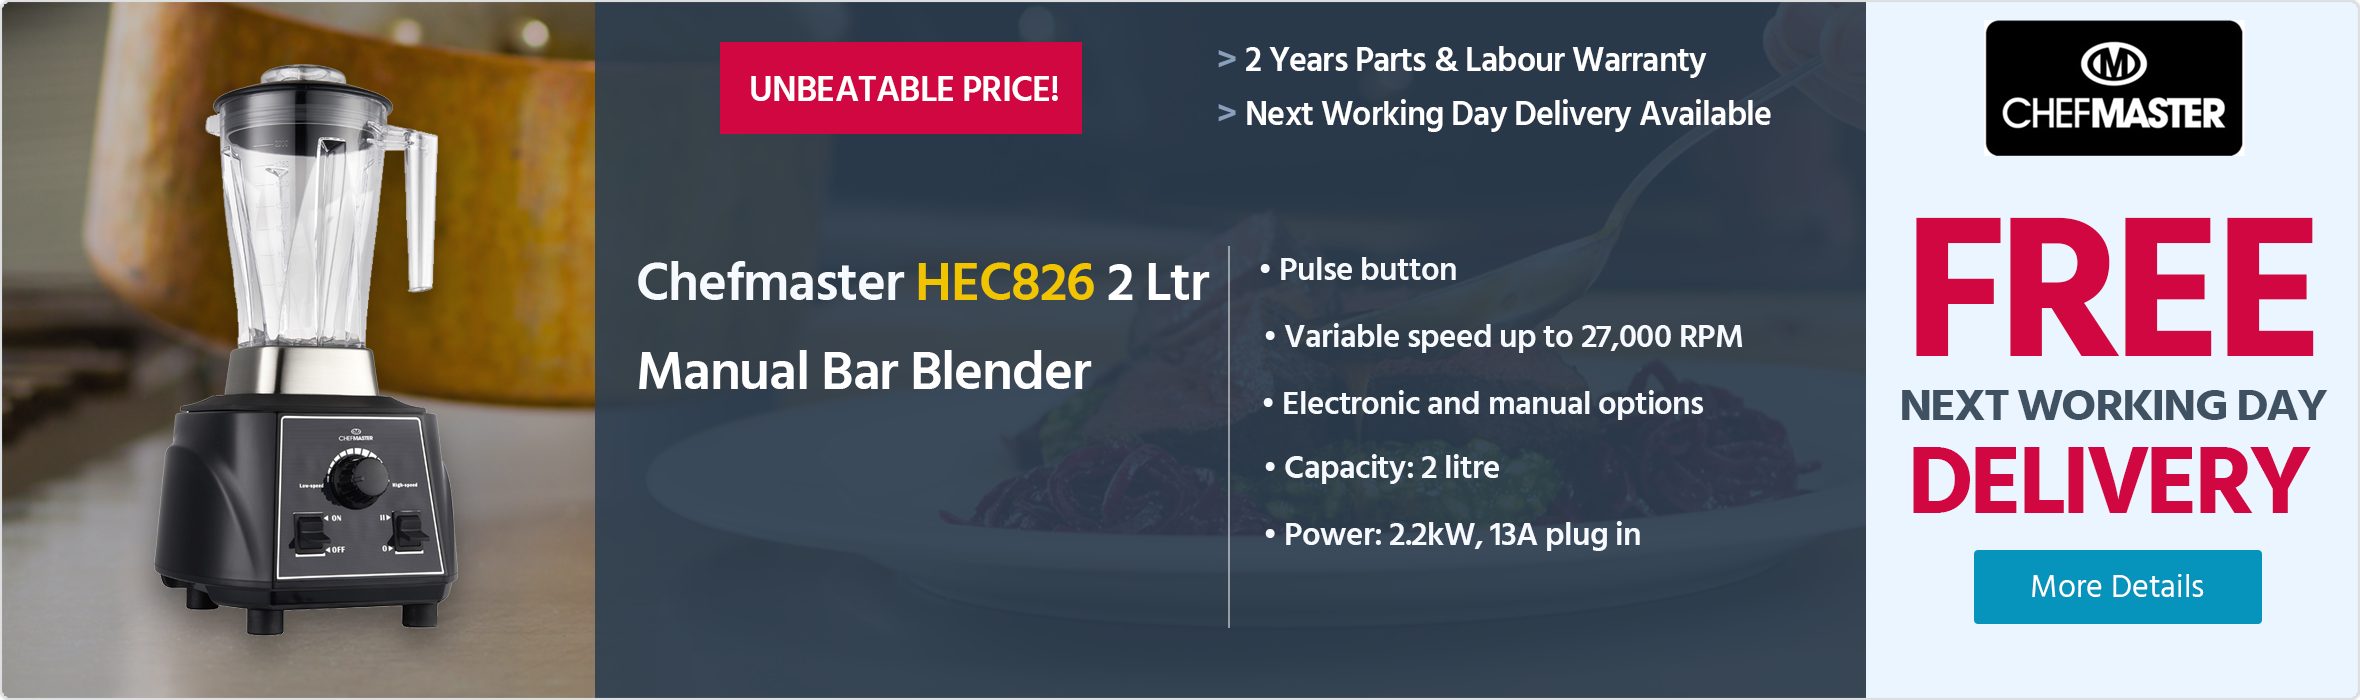 Chefmaster HEC826 2 Ltr Manual Bar Blender